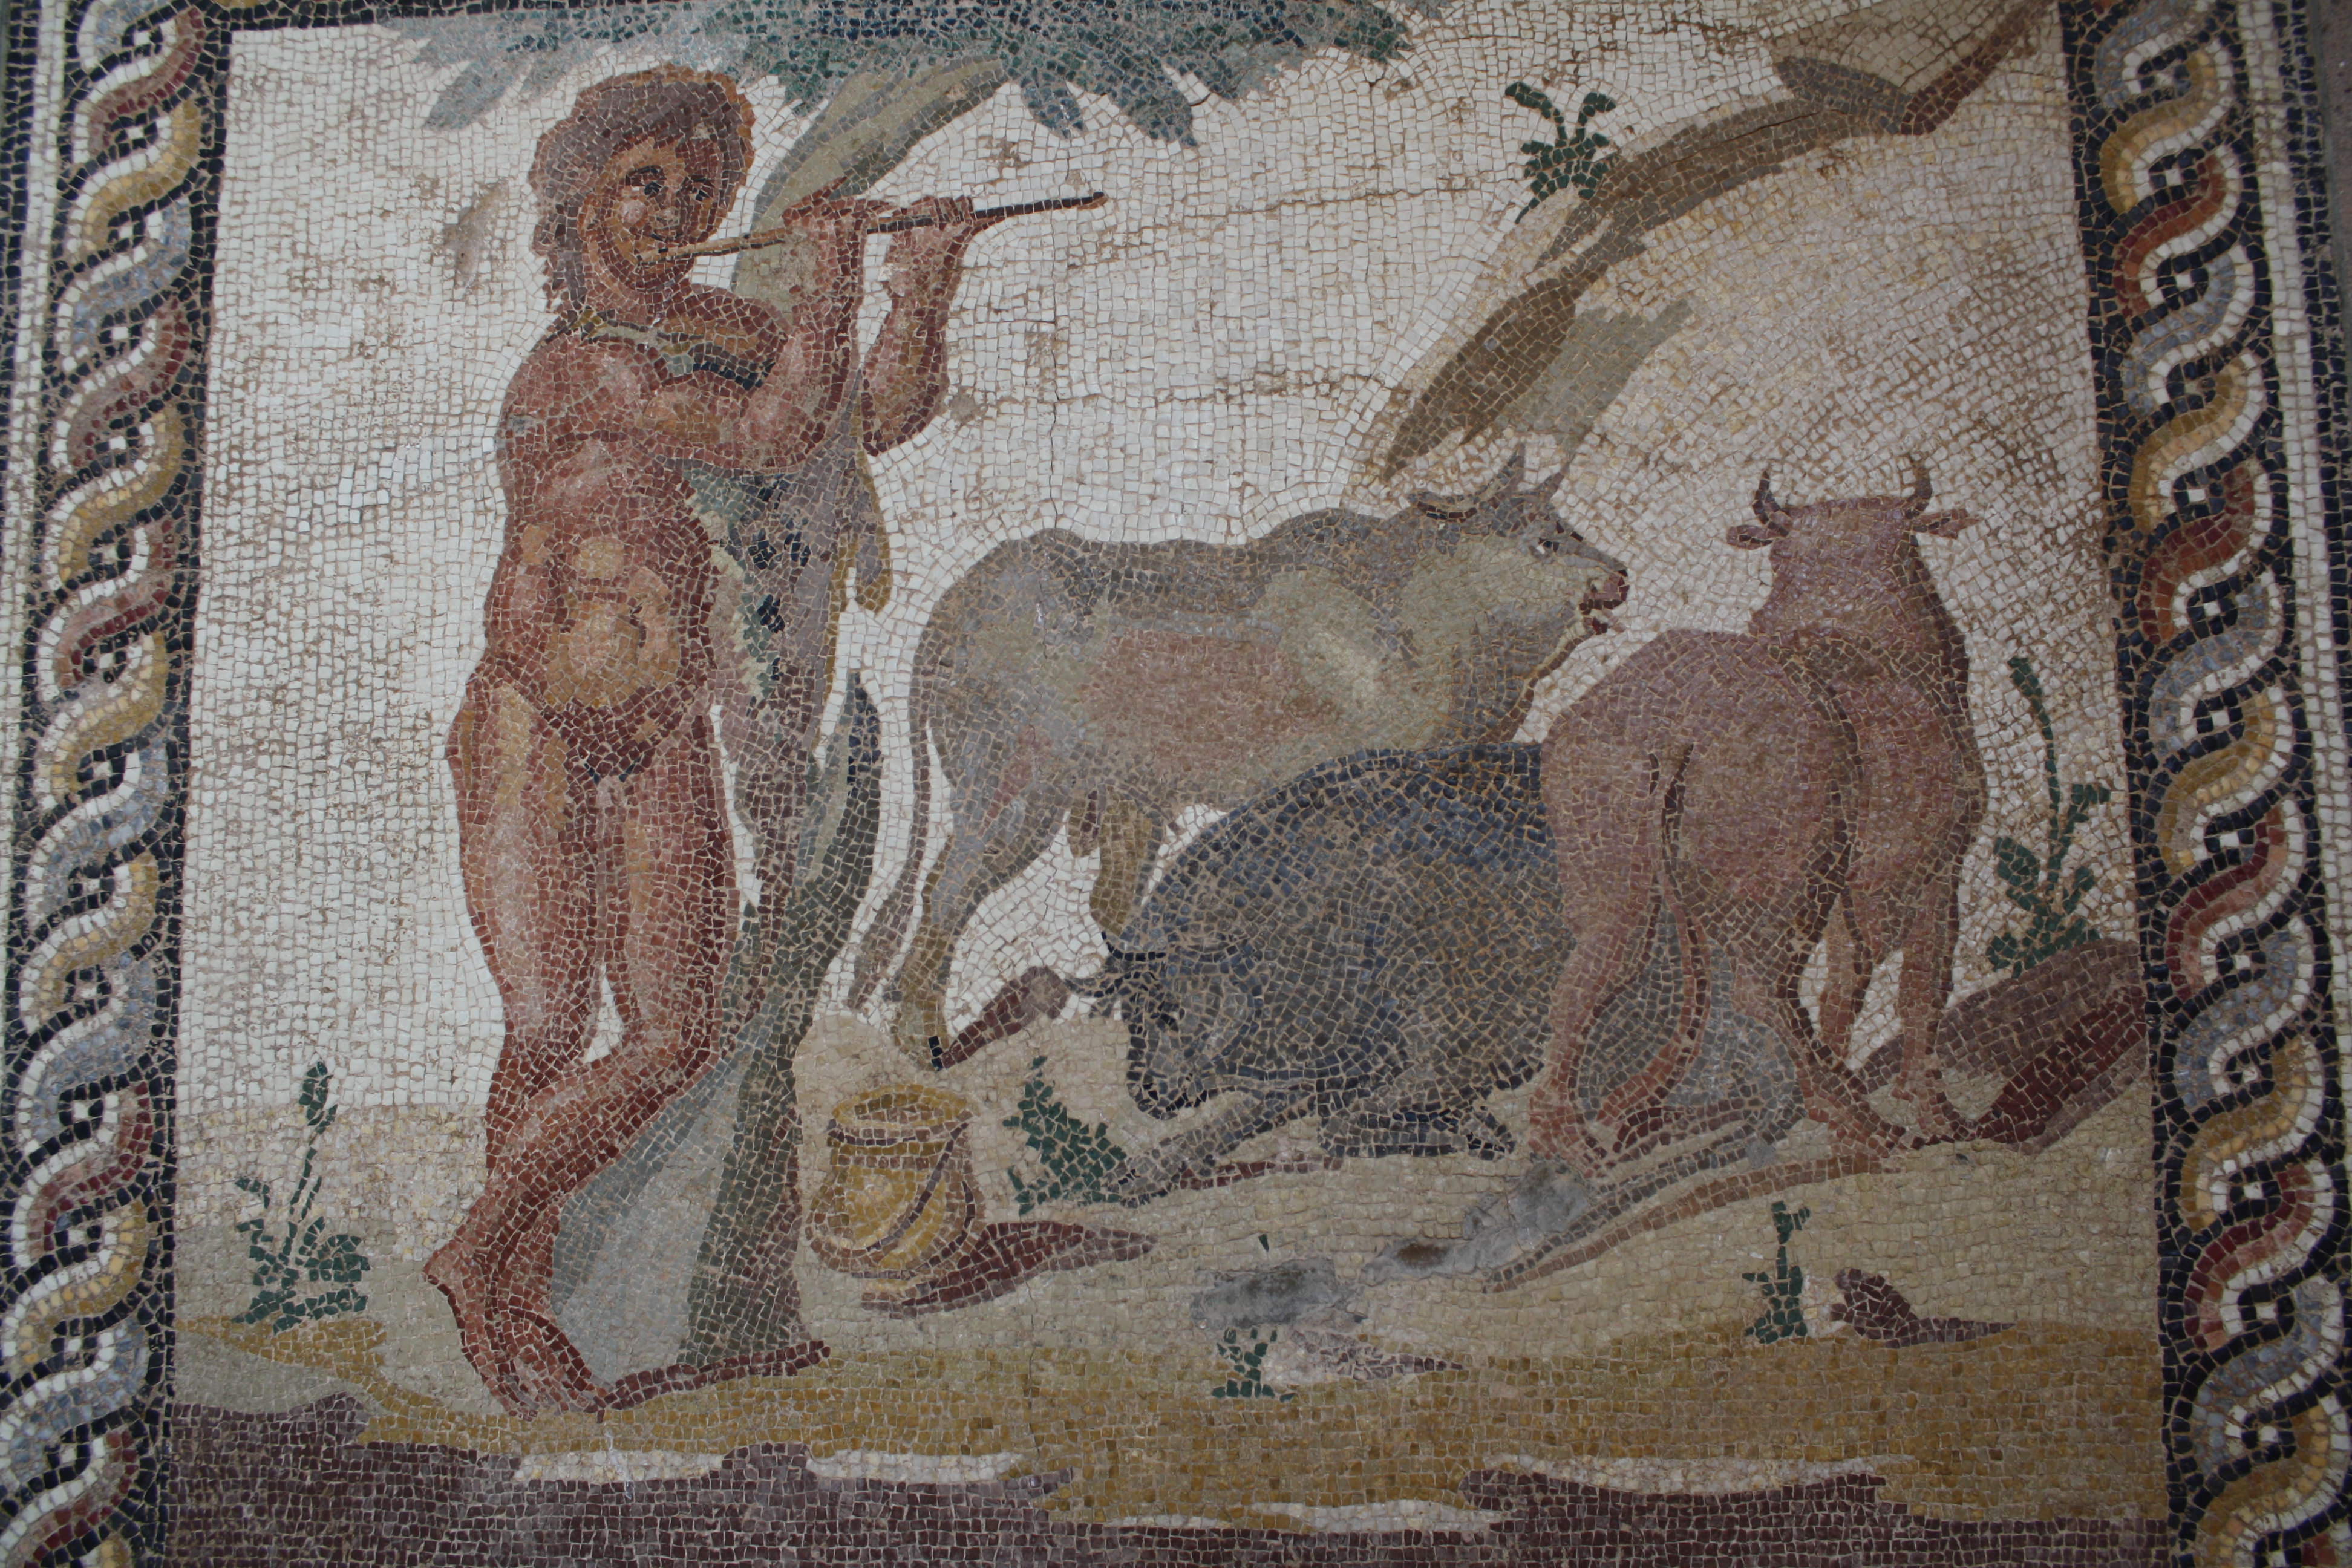 ancient roman farming